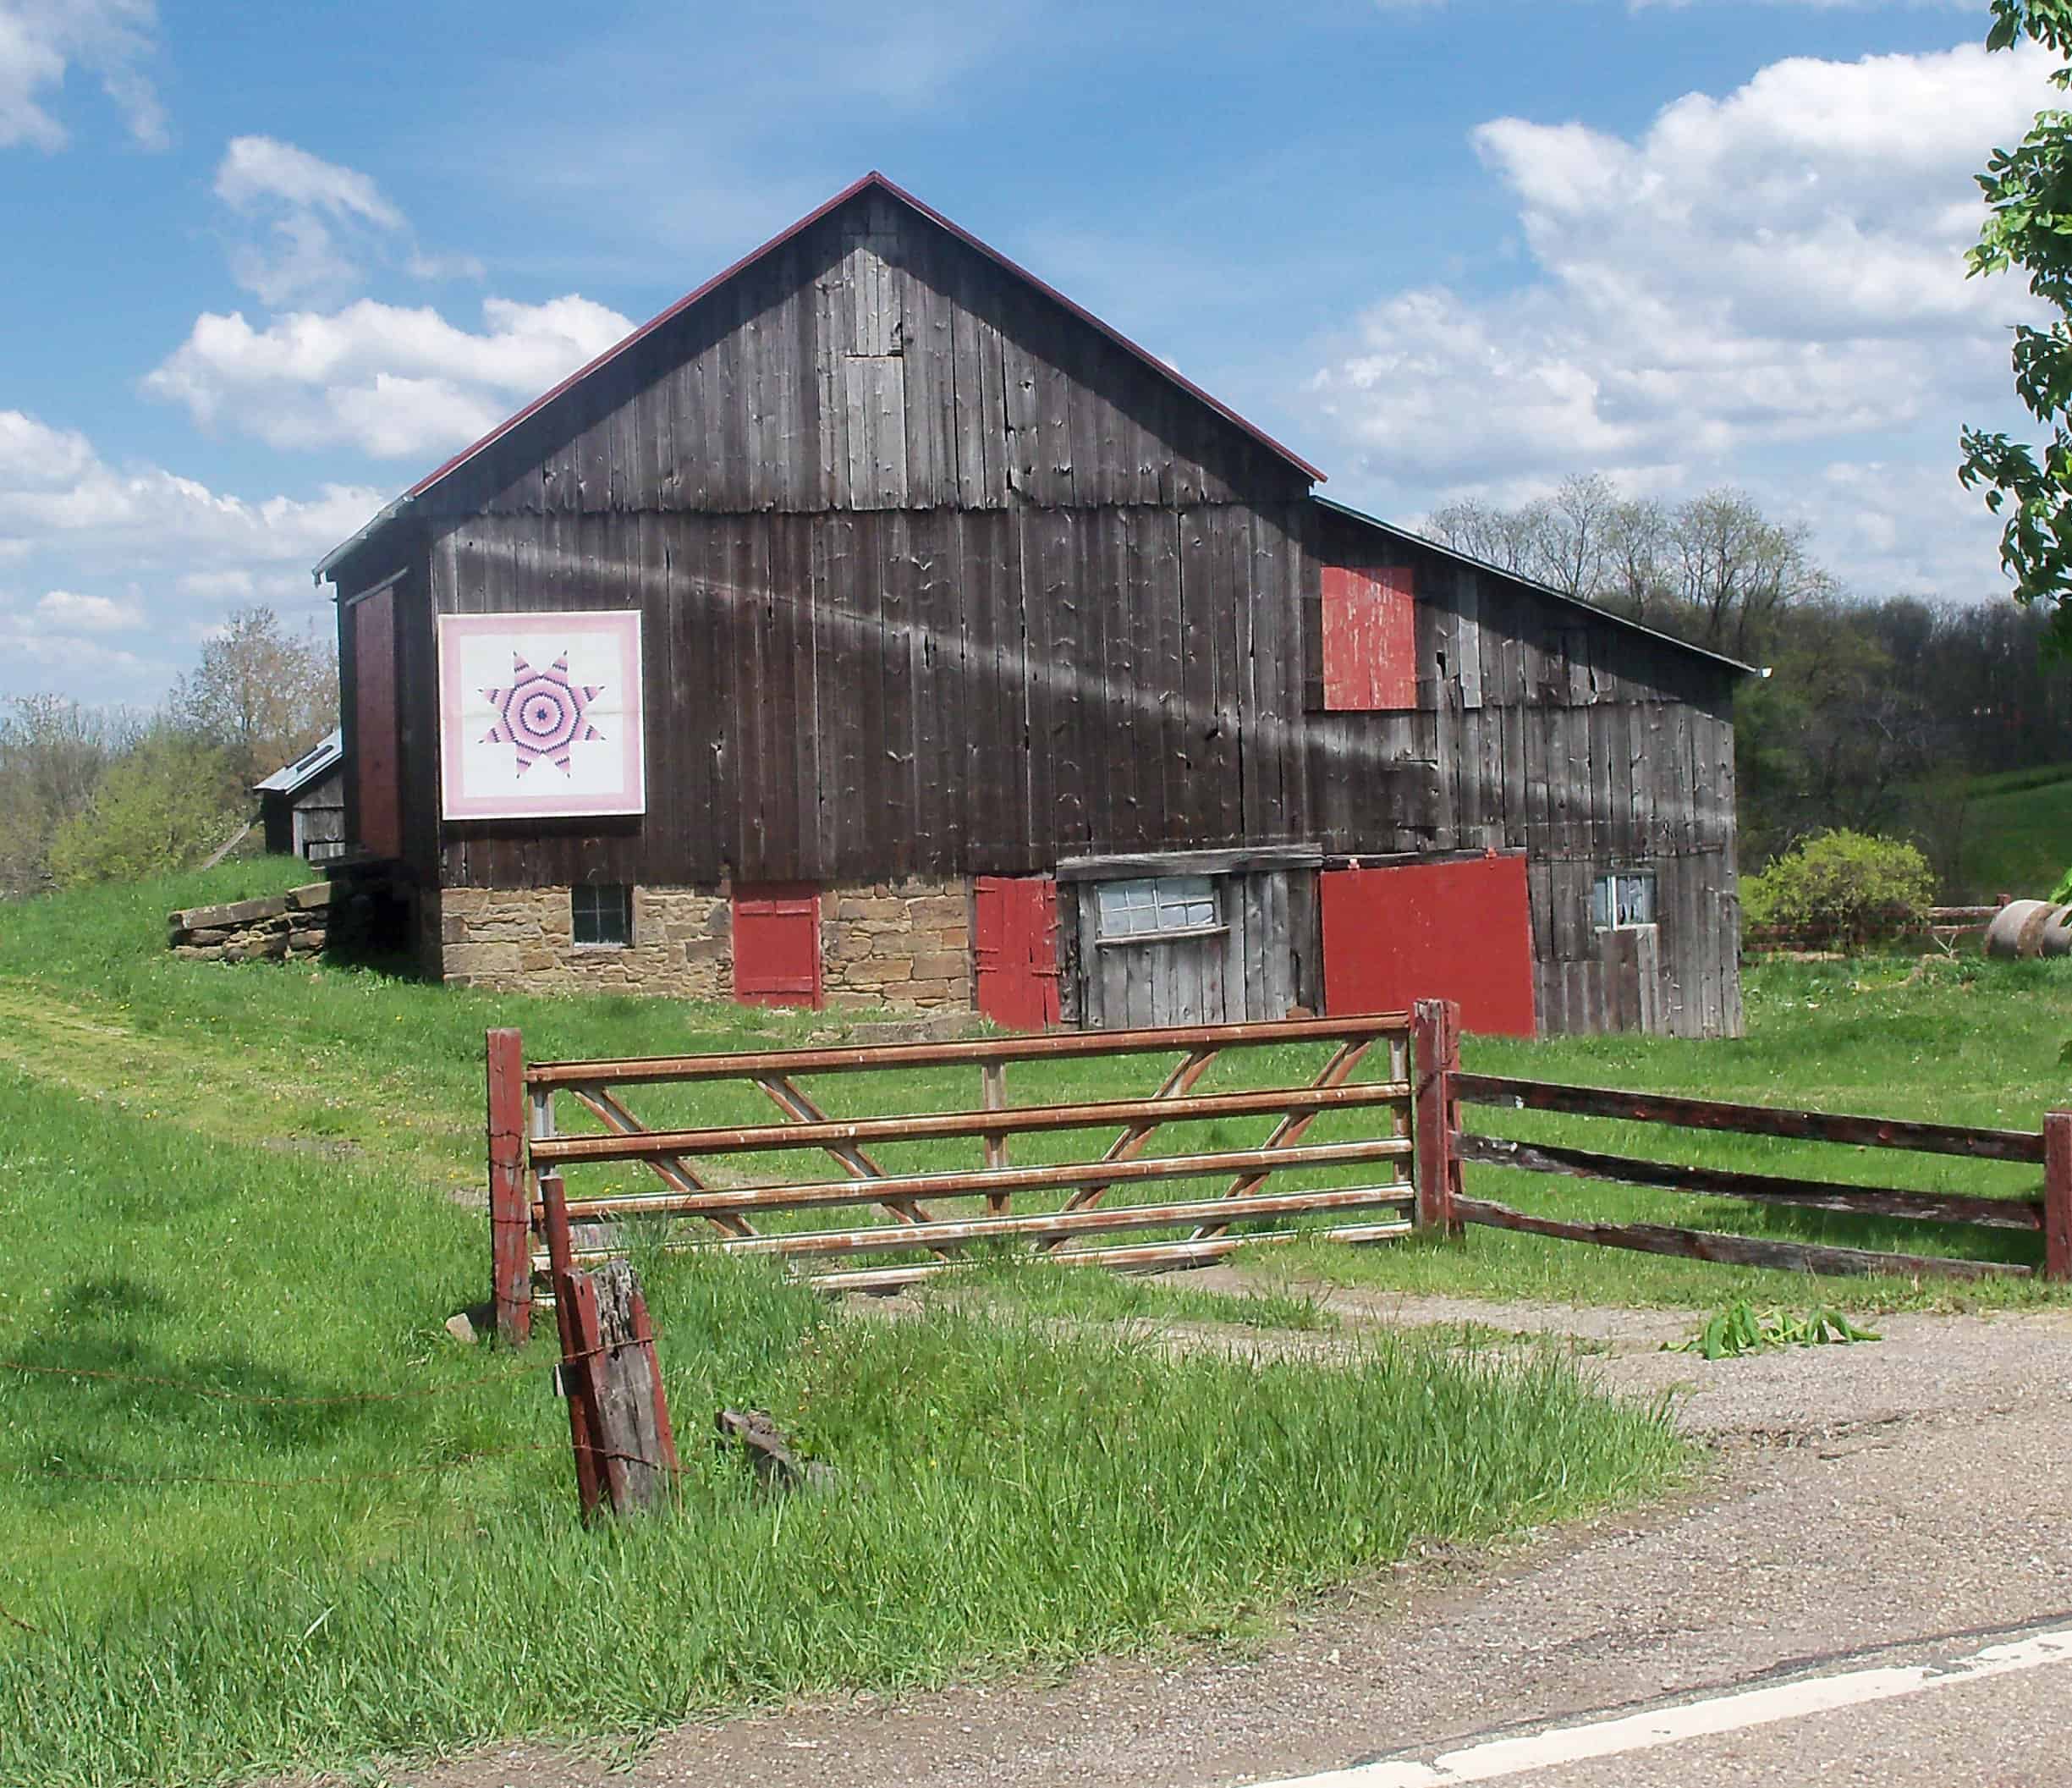 Purple Quilt Star on Barn, Harrisville, Ohio by Roseohioresident